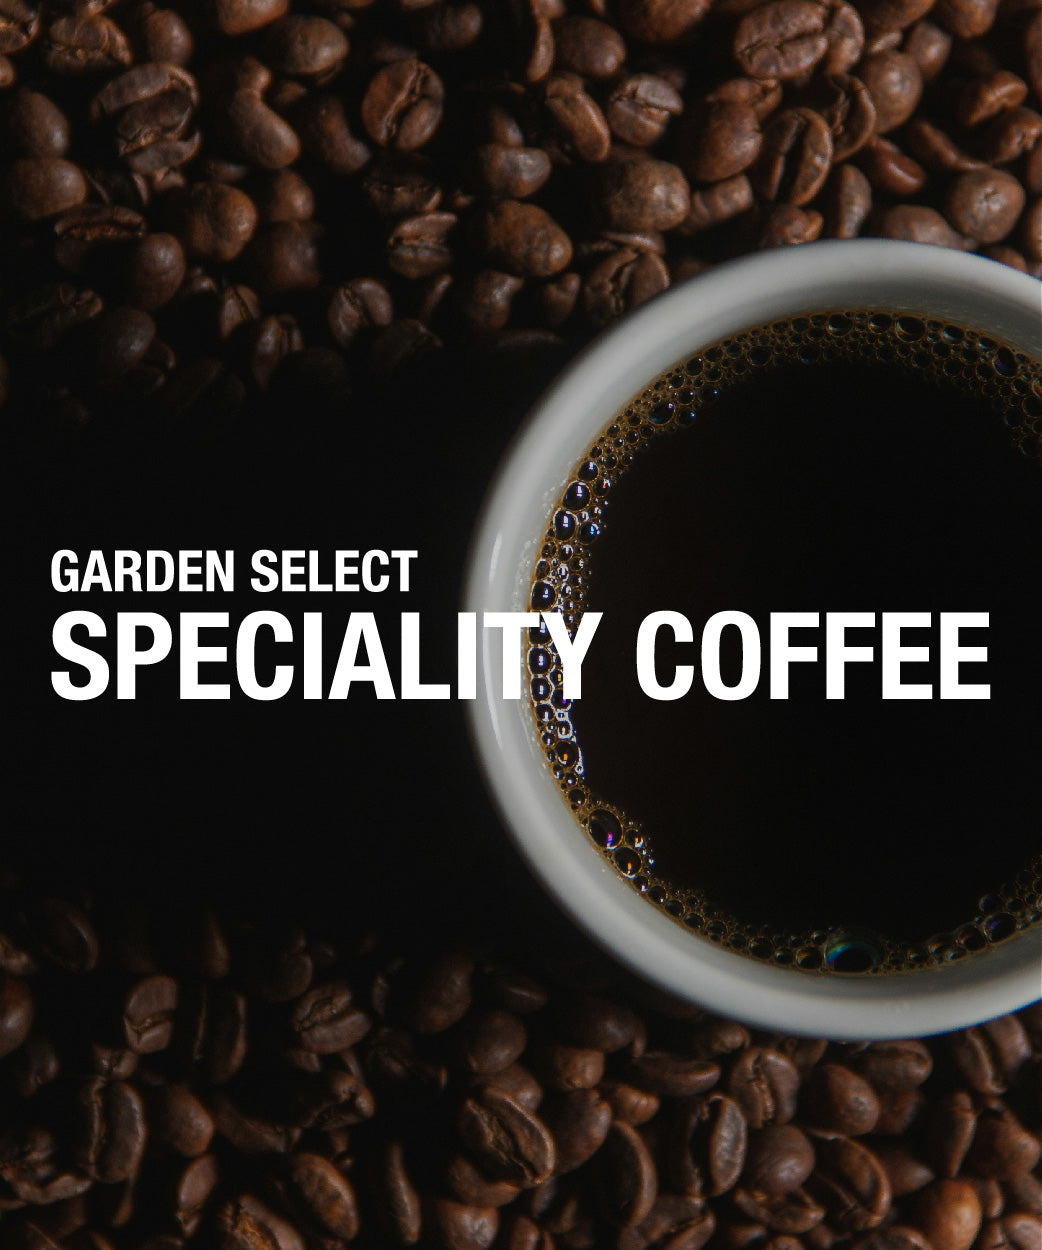 GARDEN SELECT SPECIALITY COFFEE